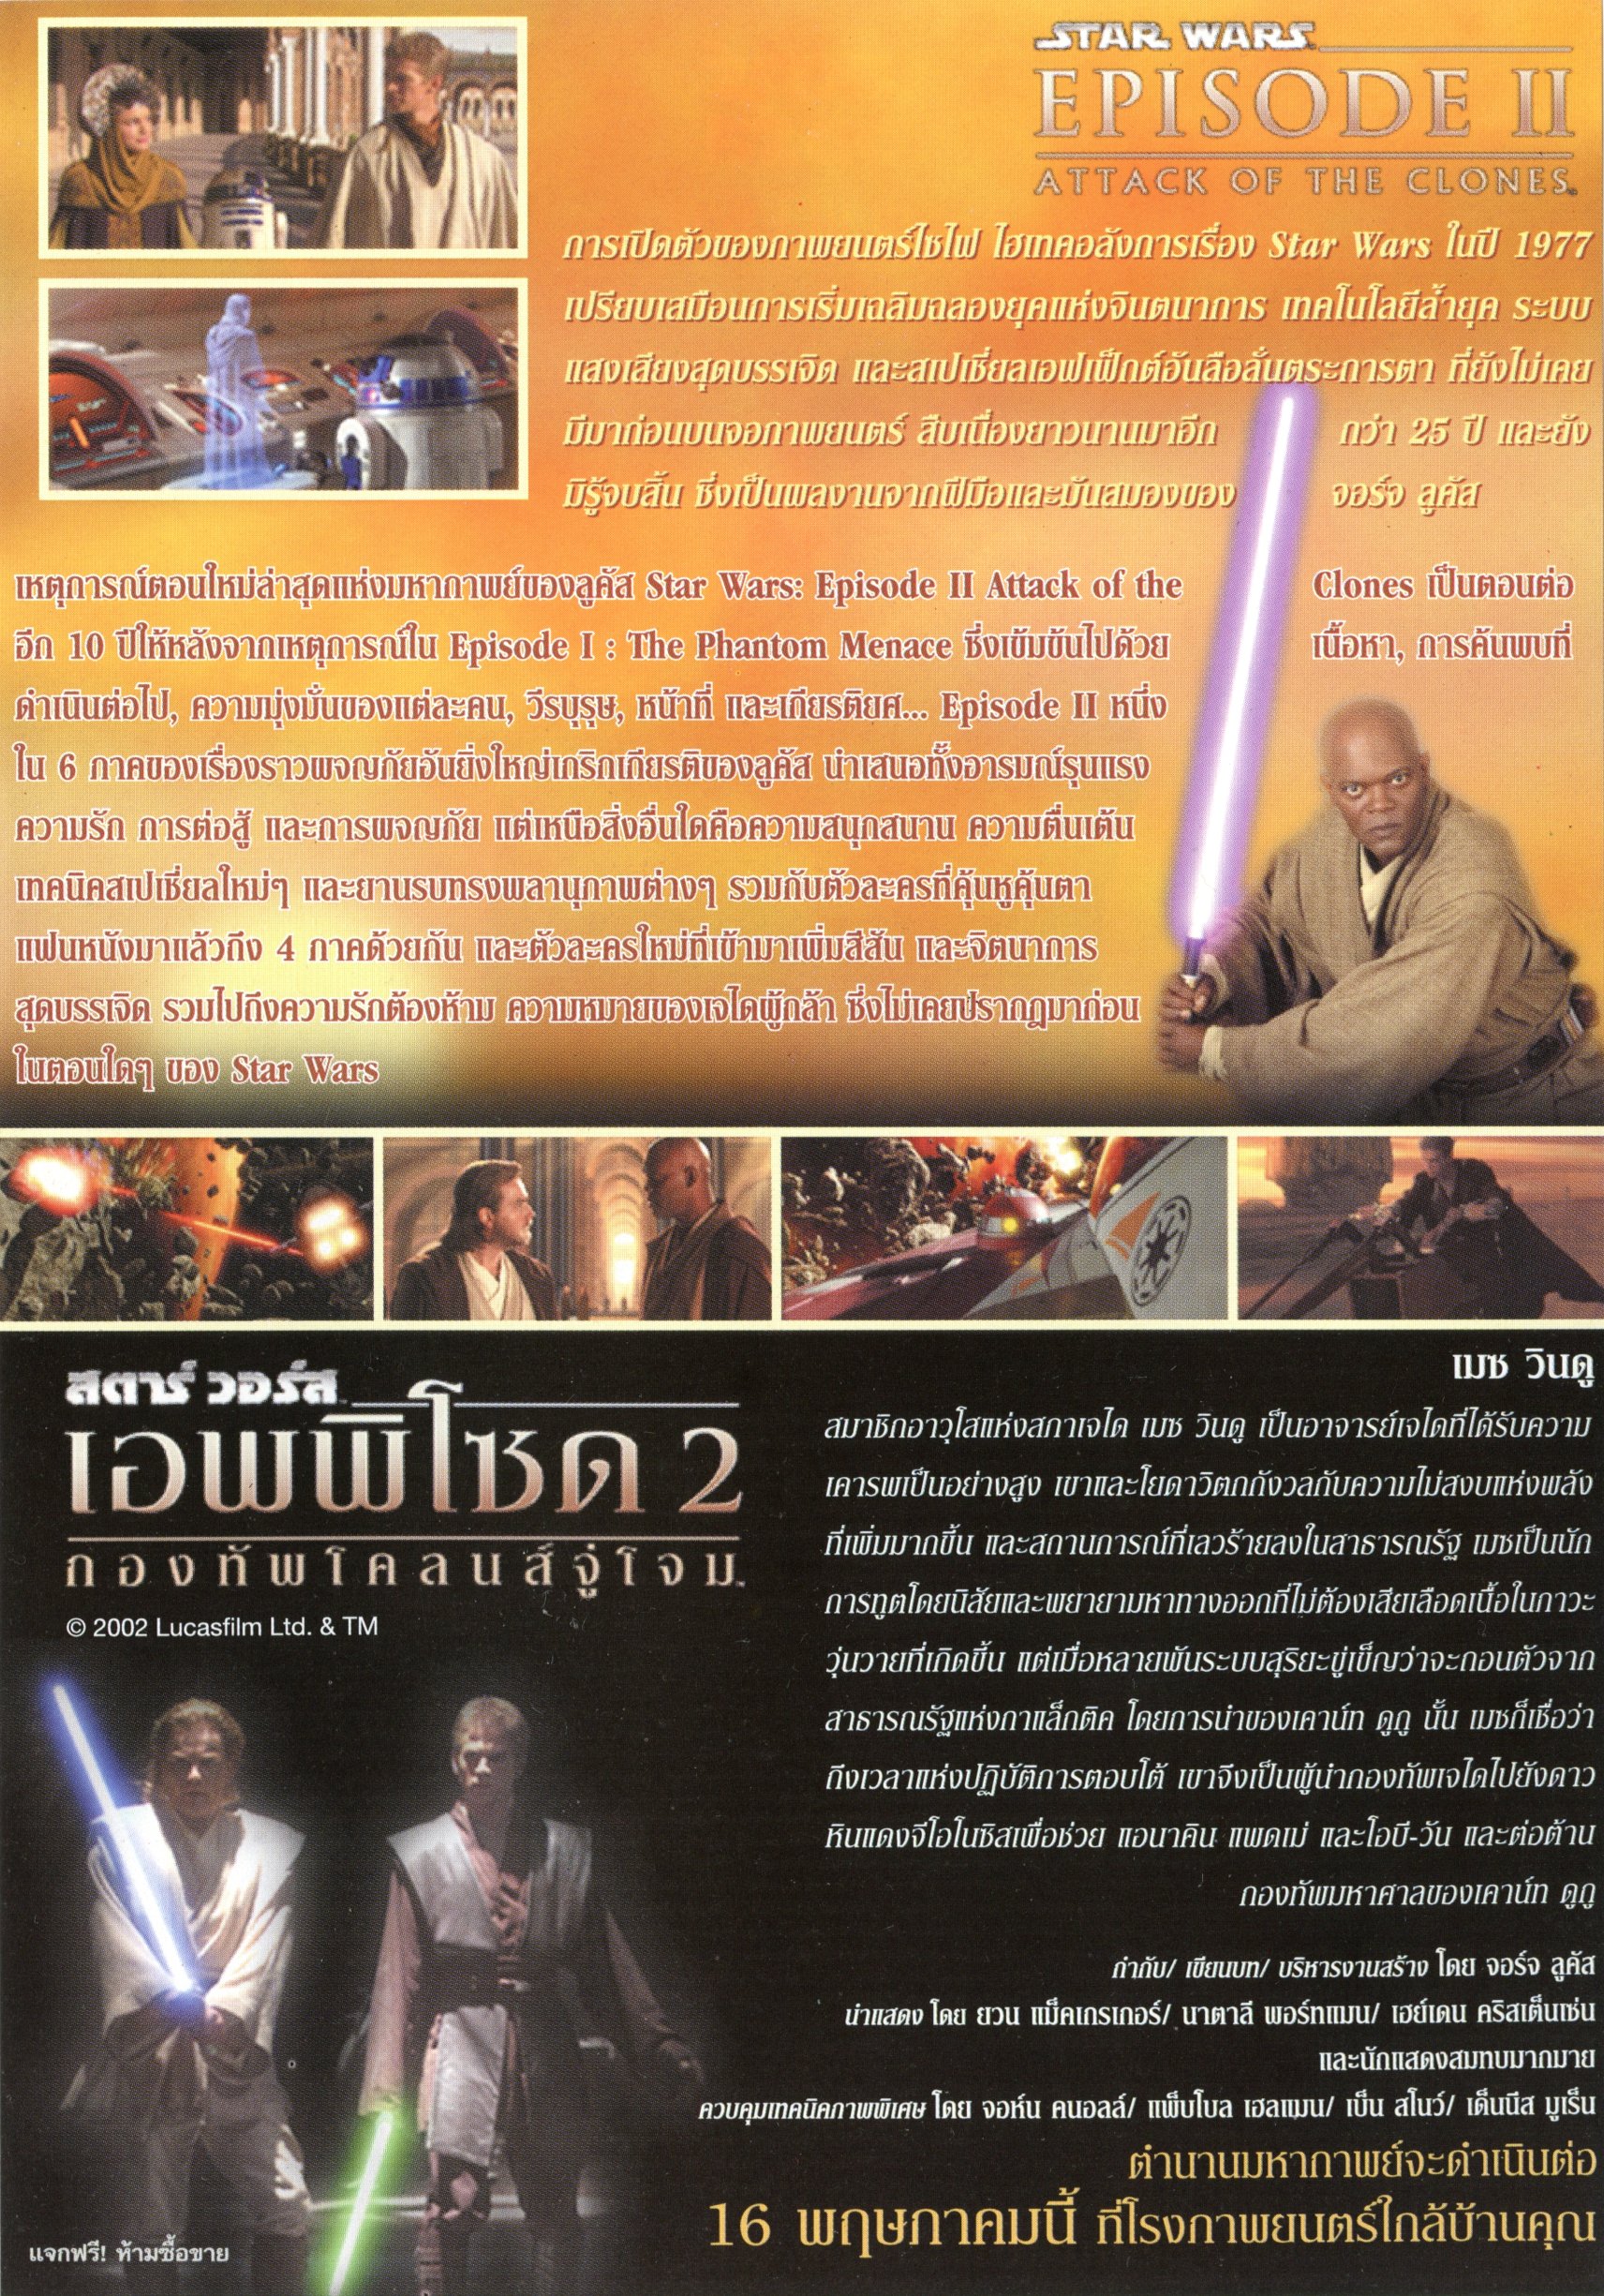 AOTC Thailand Handbill - Mace 2.jpg